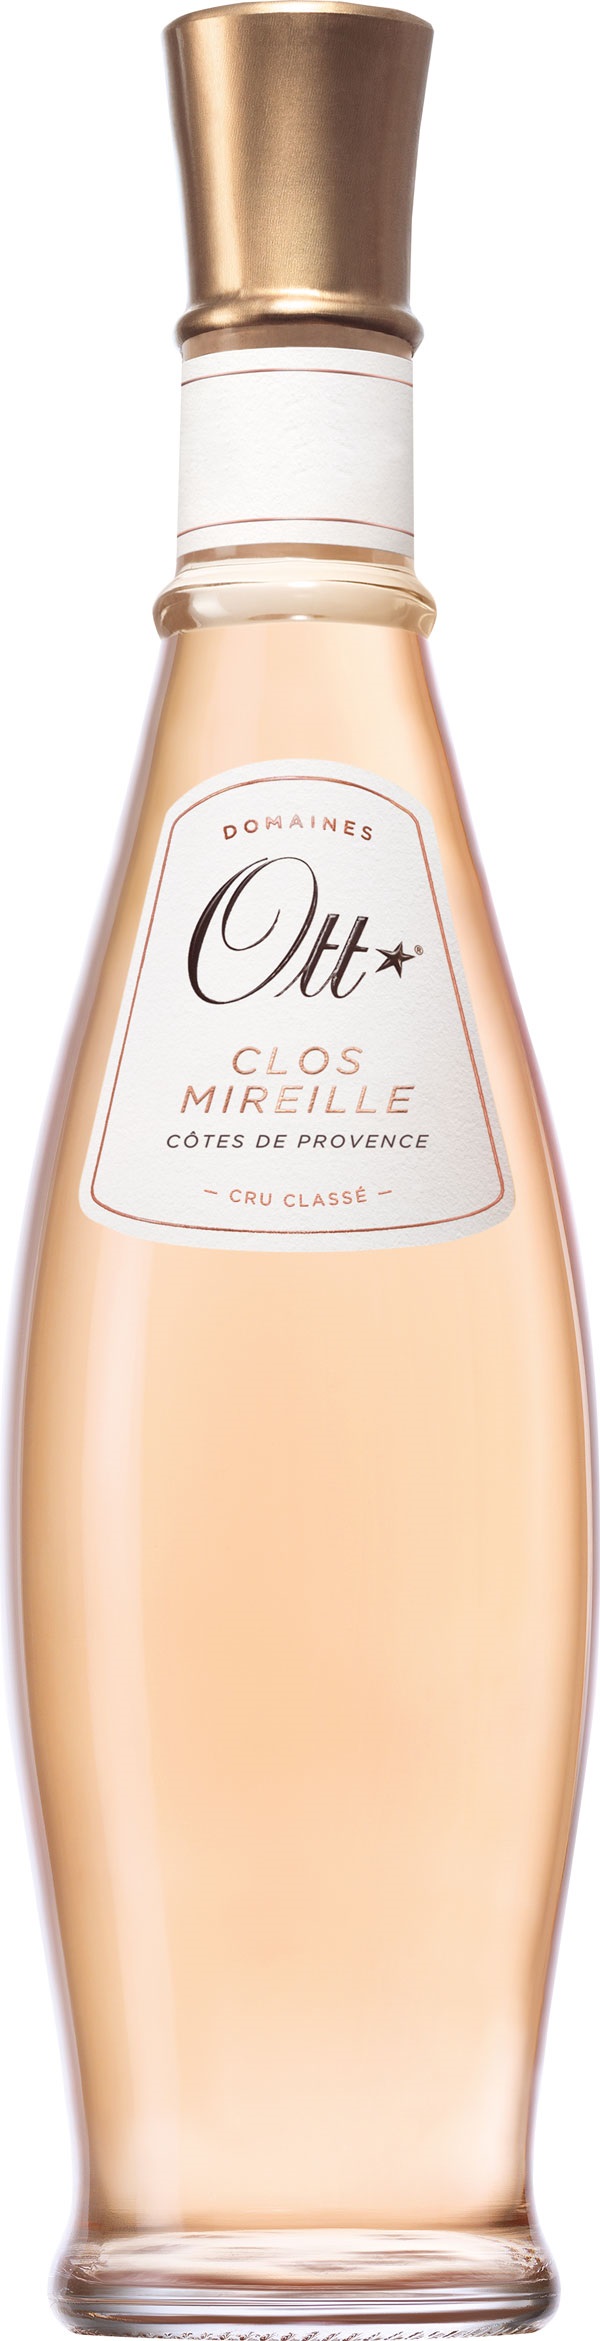 Clos Mireille Rosé halbe Flasche